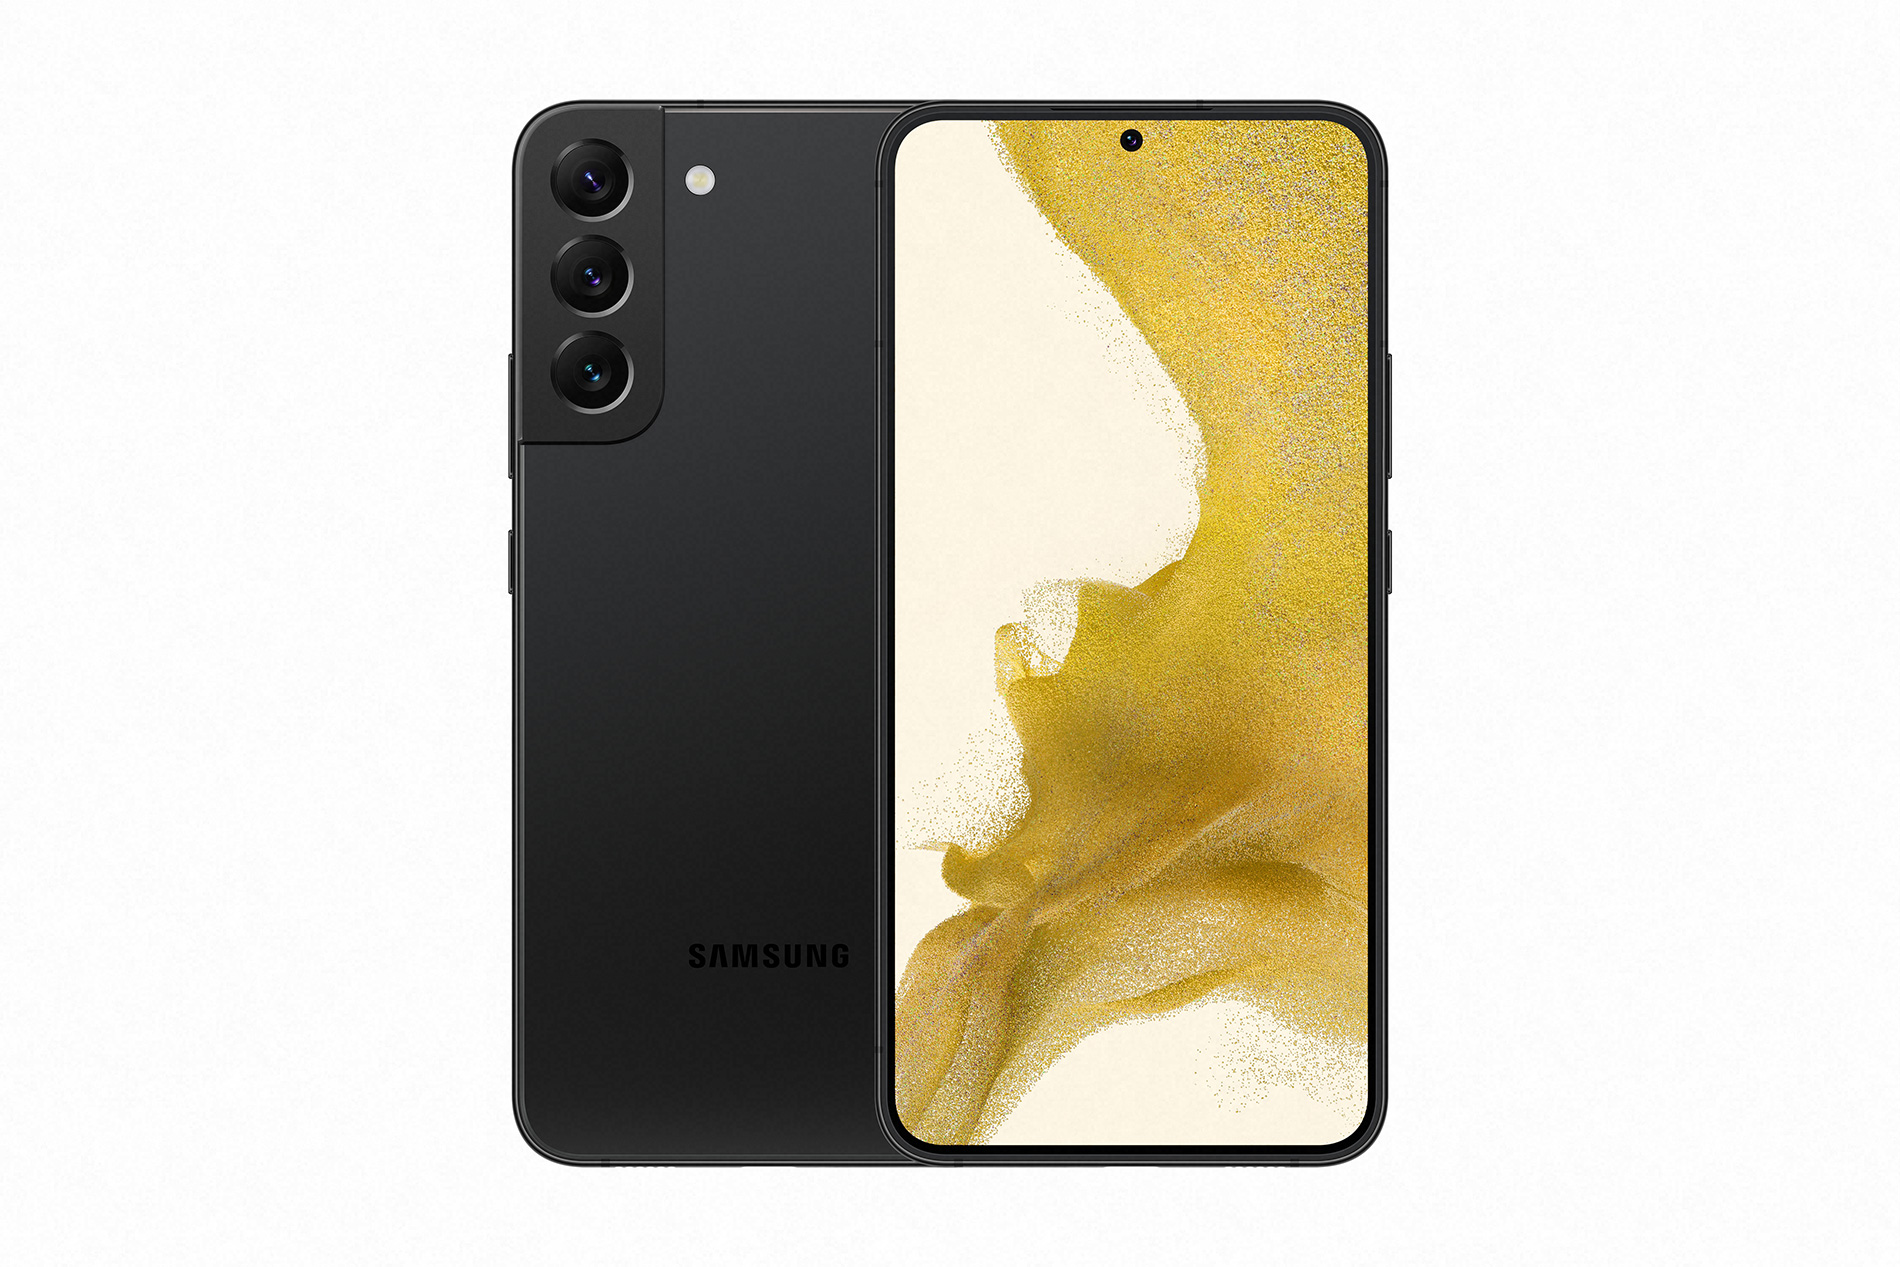 S22+, Samsung Galaxy S22+: Επίσημα! Χαρακτηριστικά, τιμή, χρώματα...
<br /> <a href=